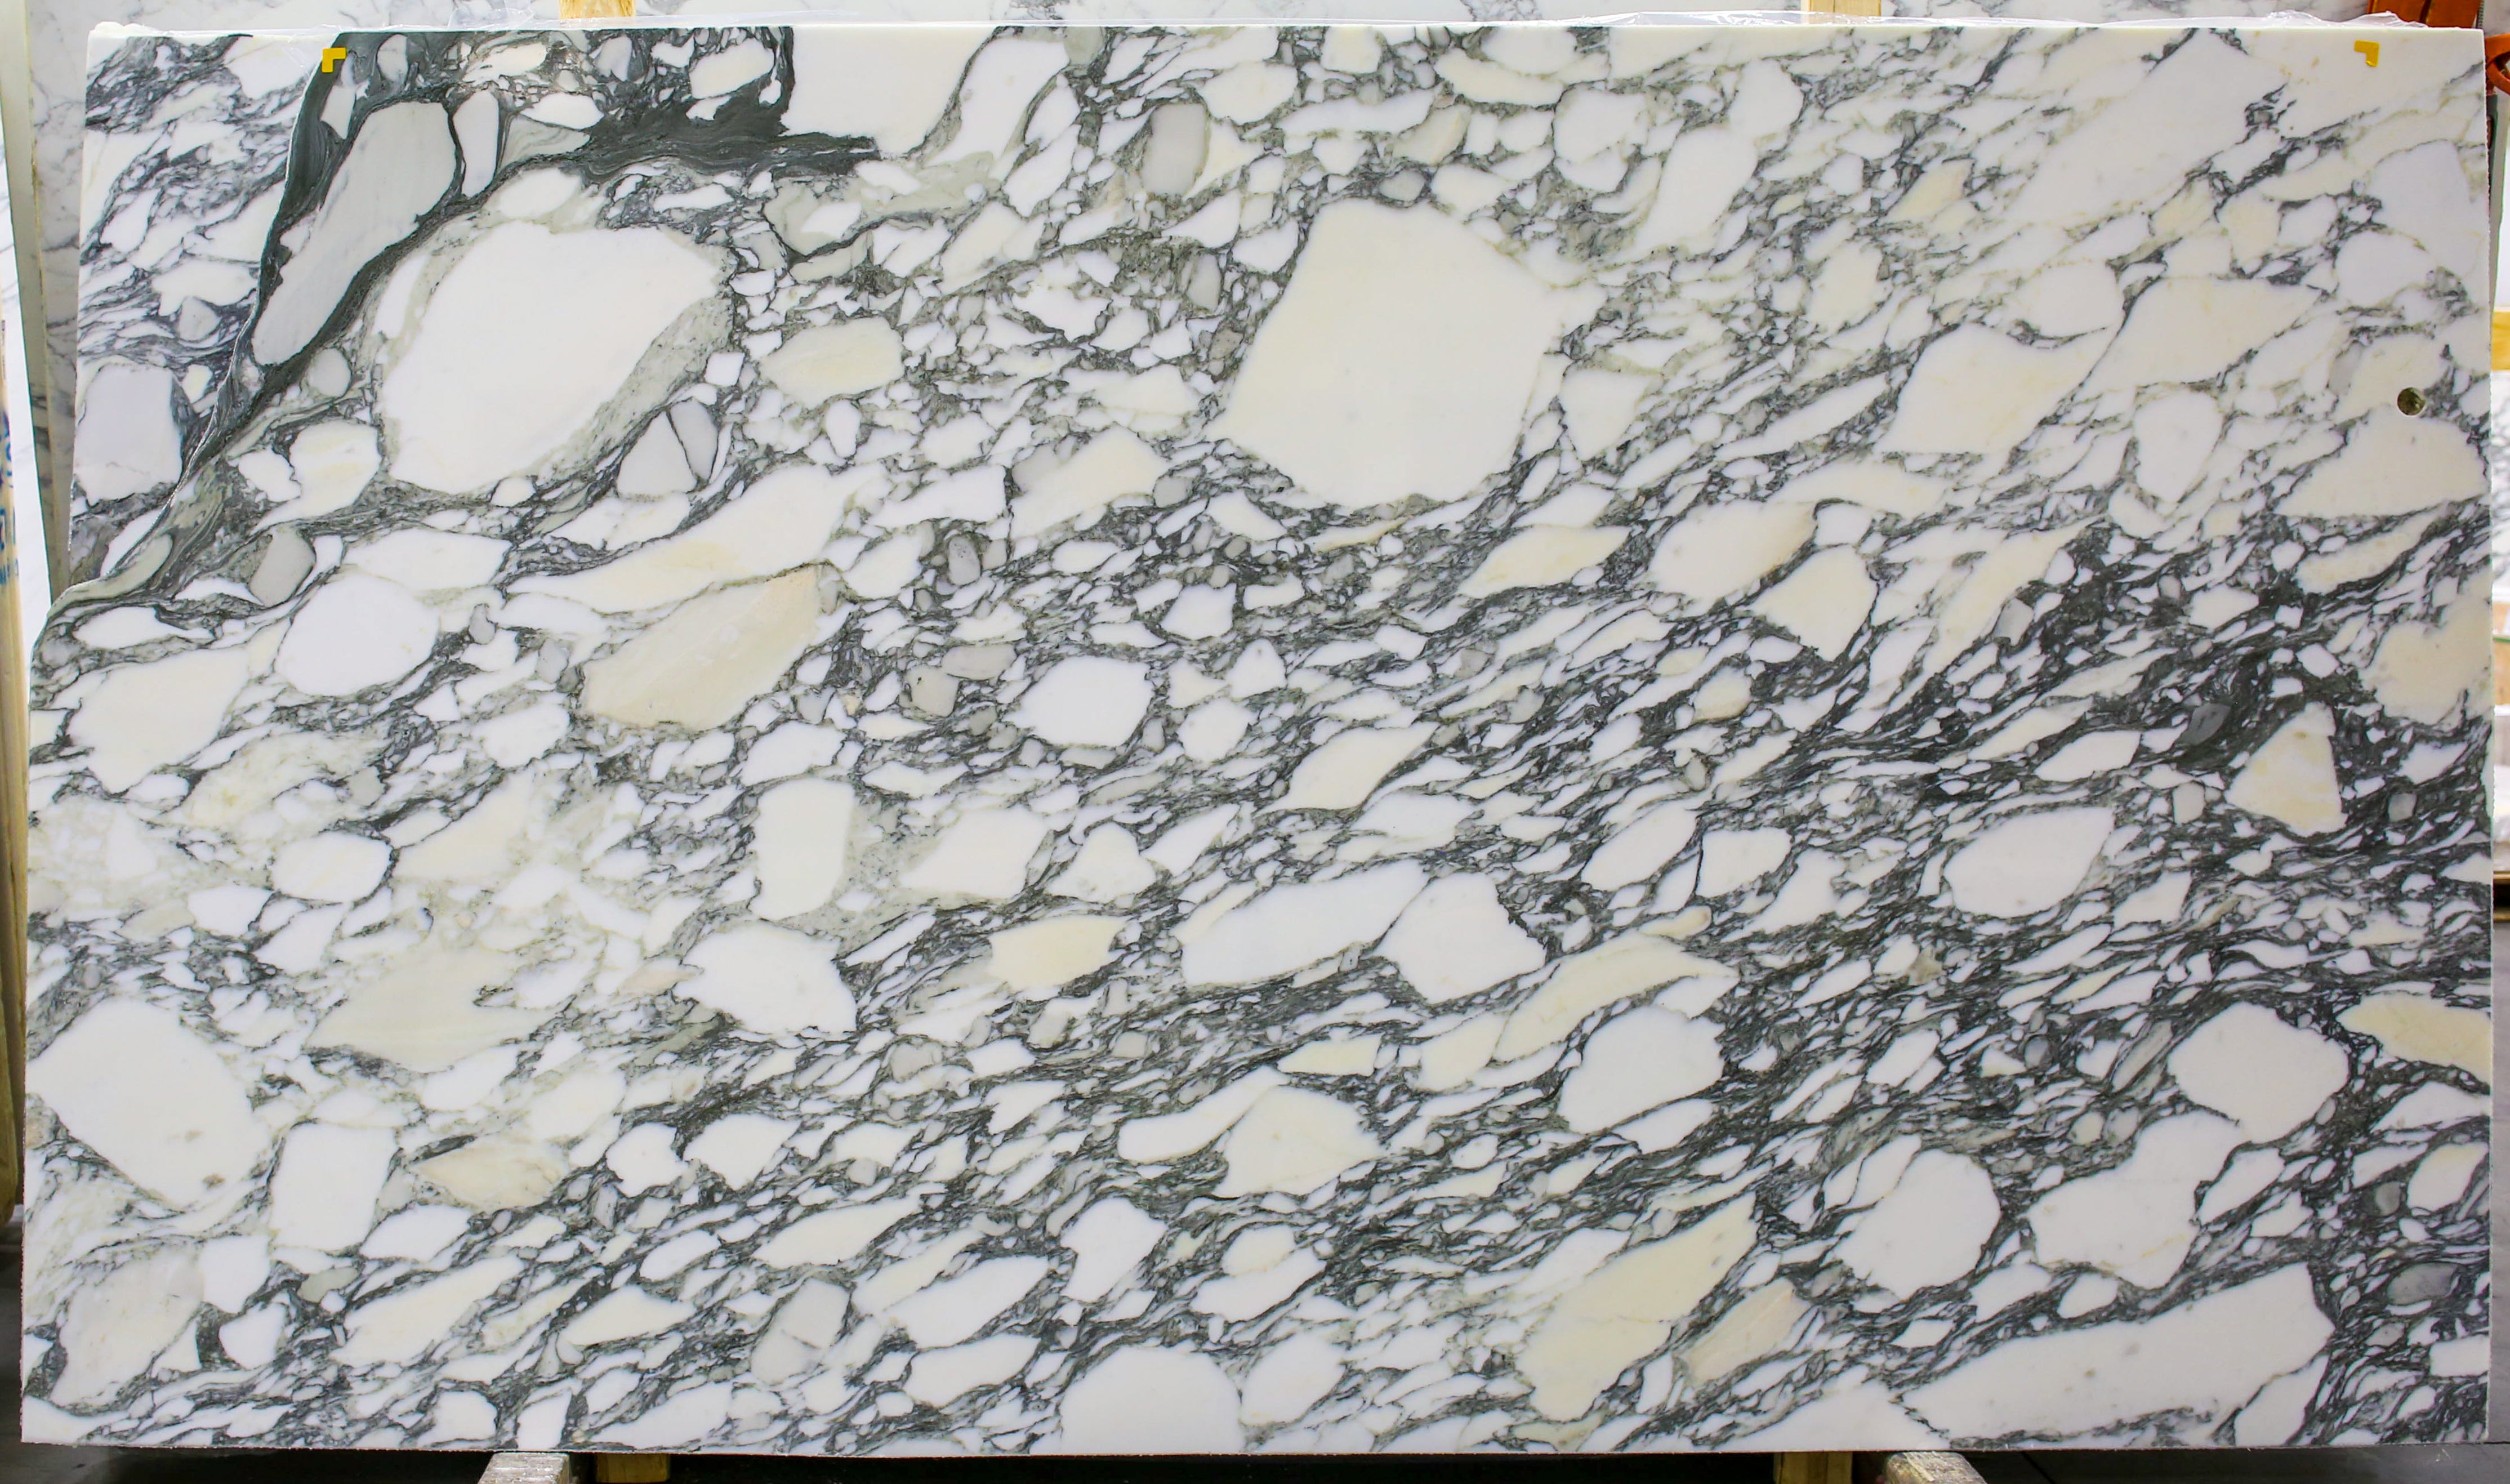  Arabescato Corchia A1 Select Marble Slab 3/4 - 1951#68 -  64x95 